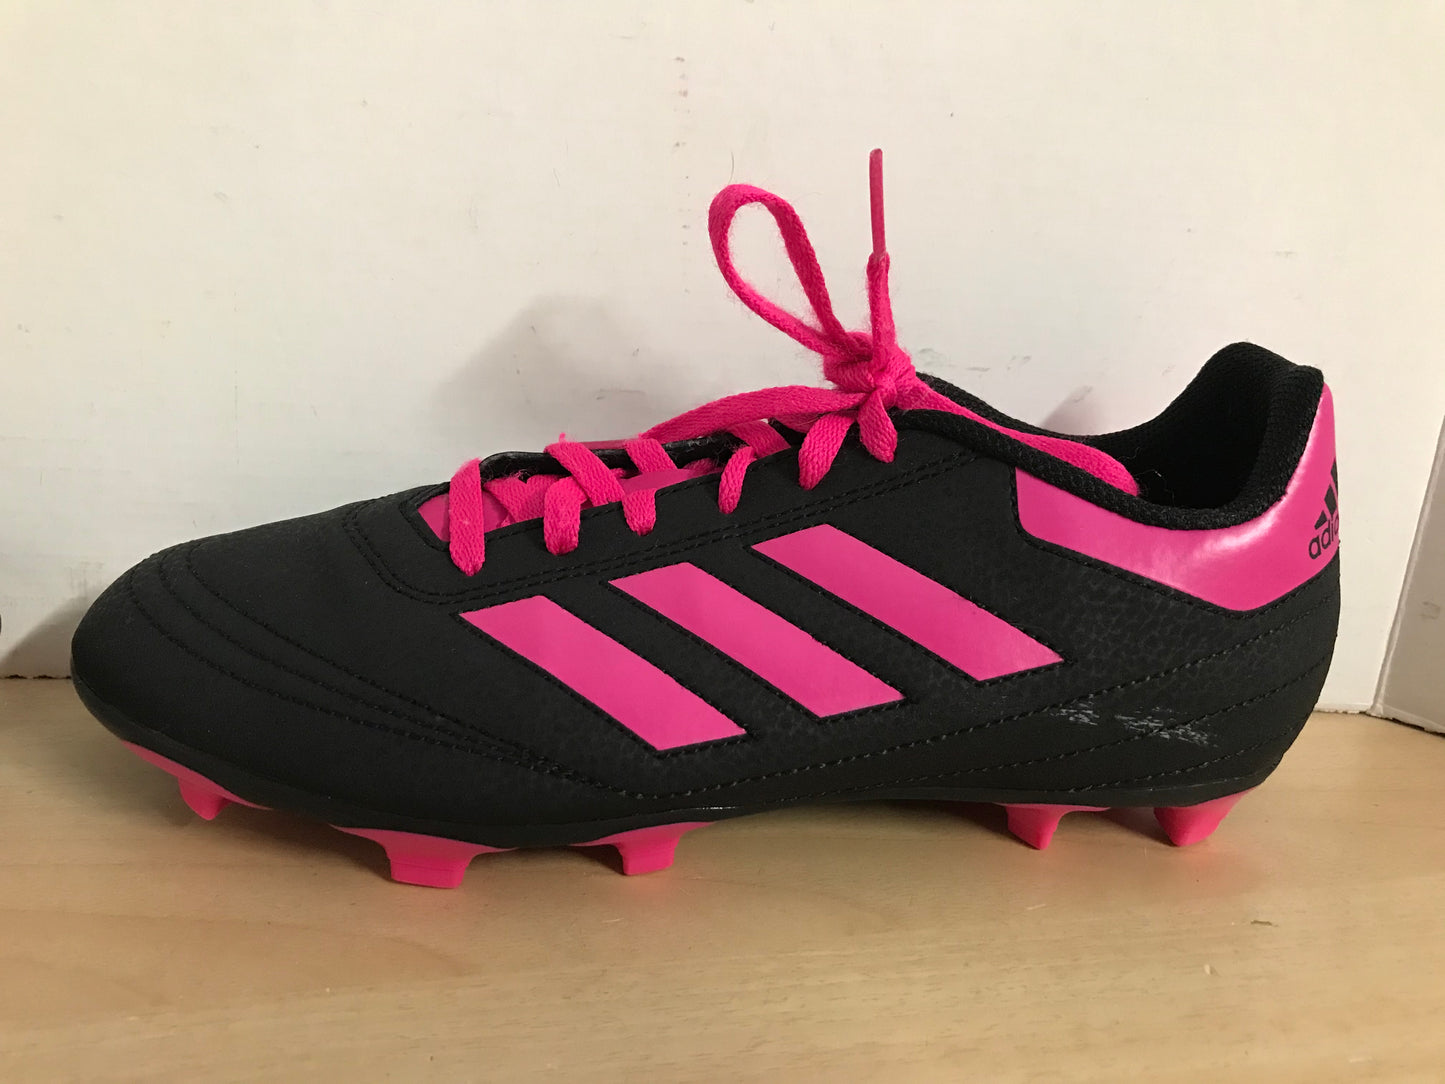 Soccer Shoes Cleats Ladies Size 6 Adidas Fushia Black New Demo Model